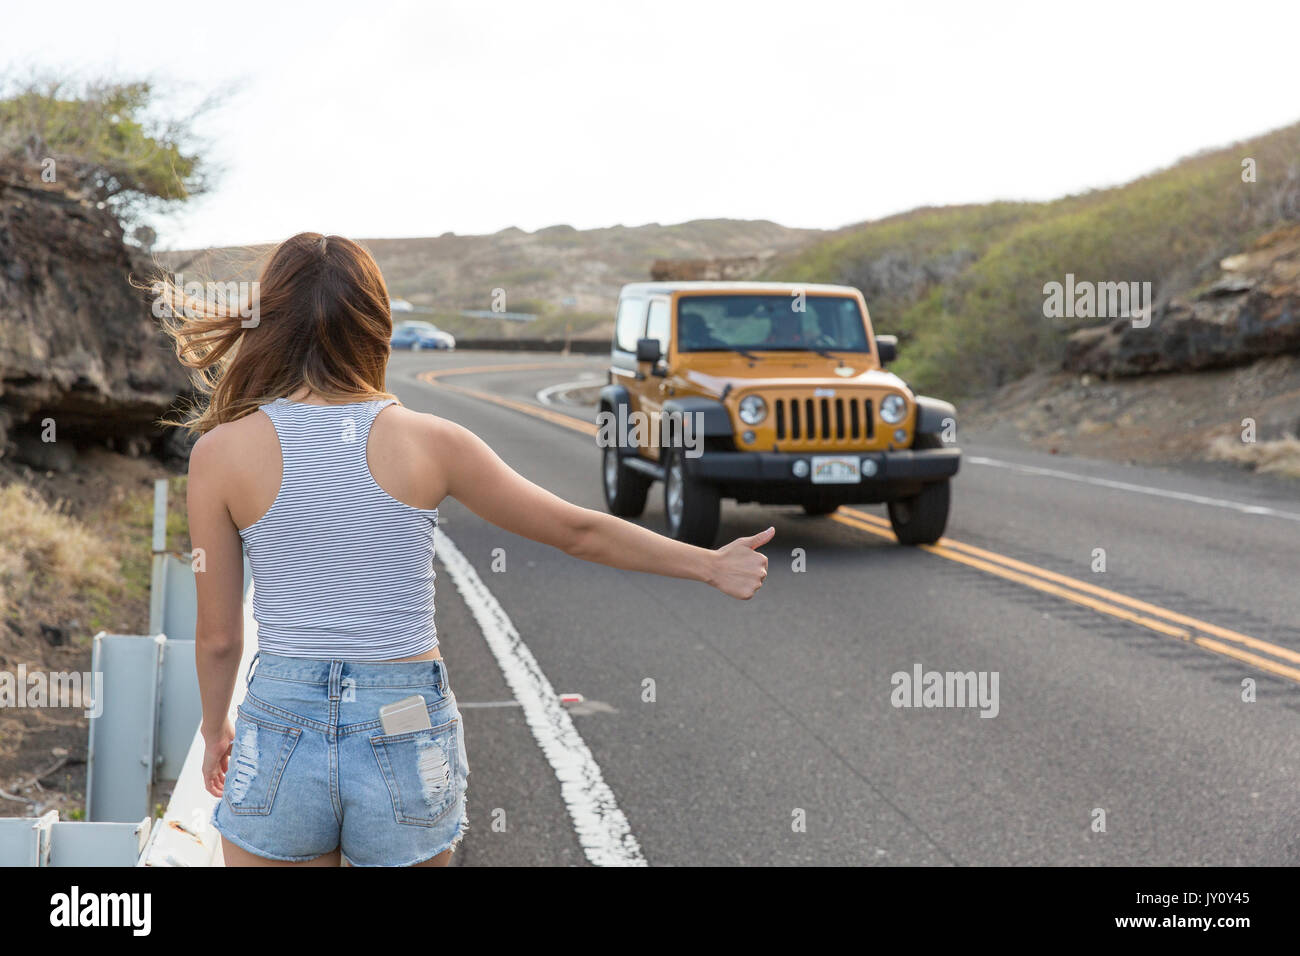 Mixed Race woman hitchhiking on road Stock Photo - Alamy